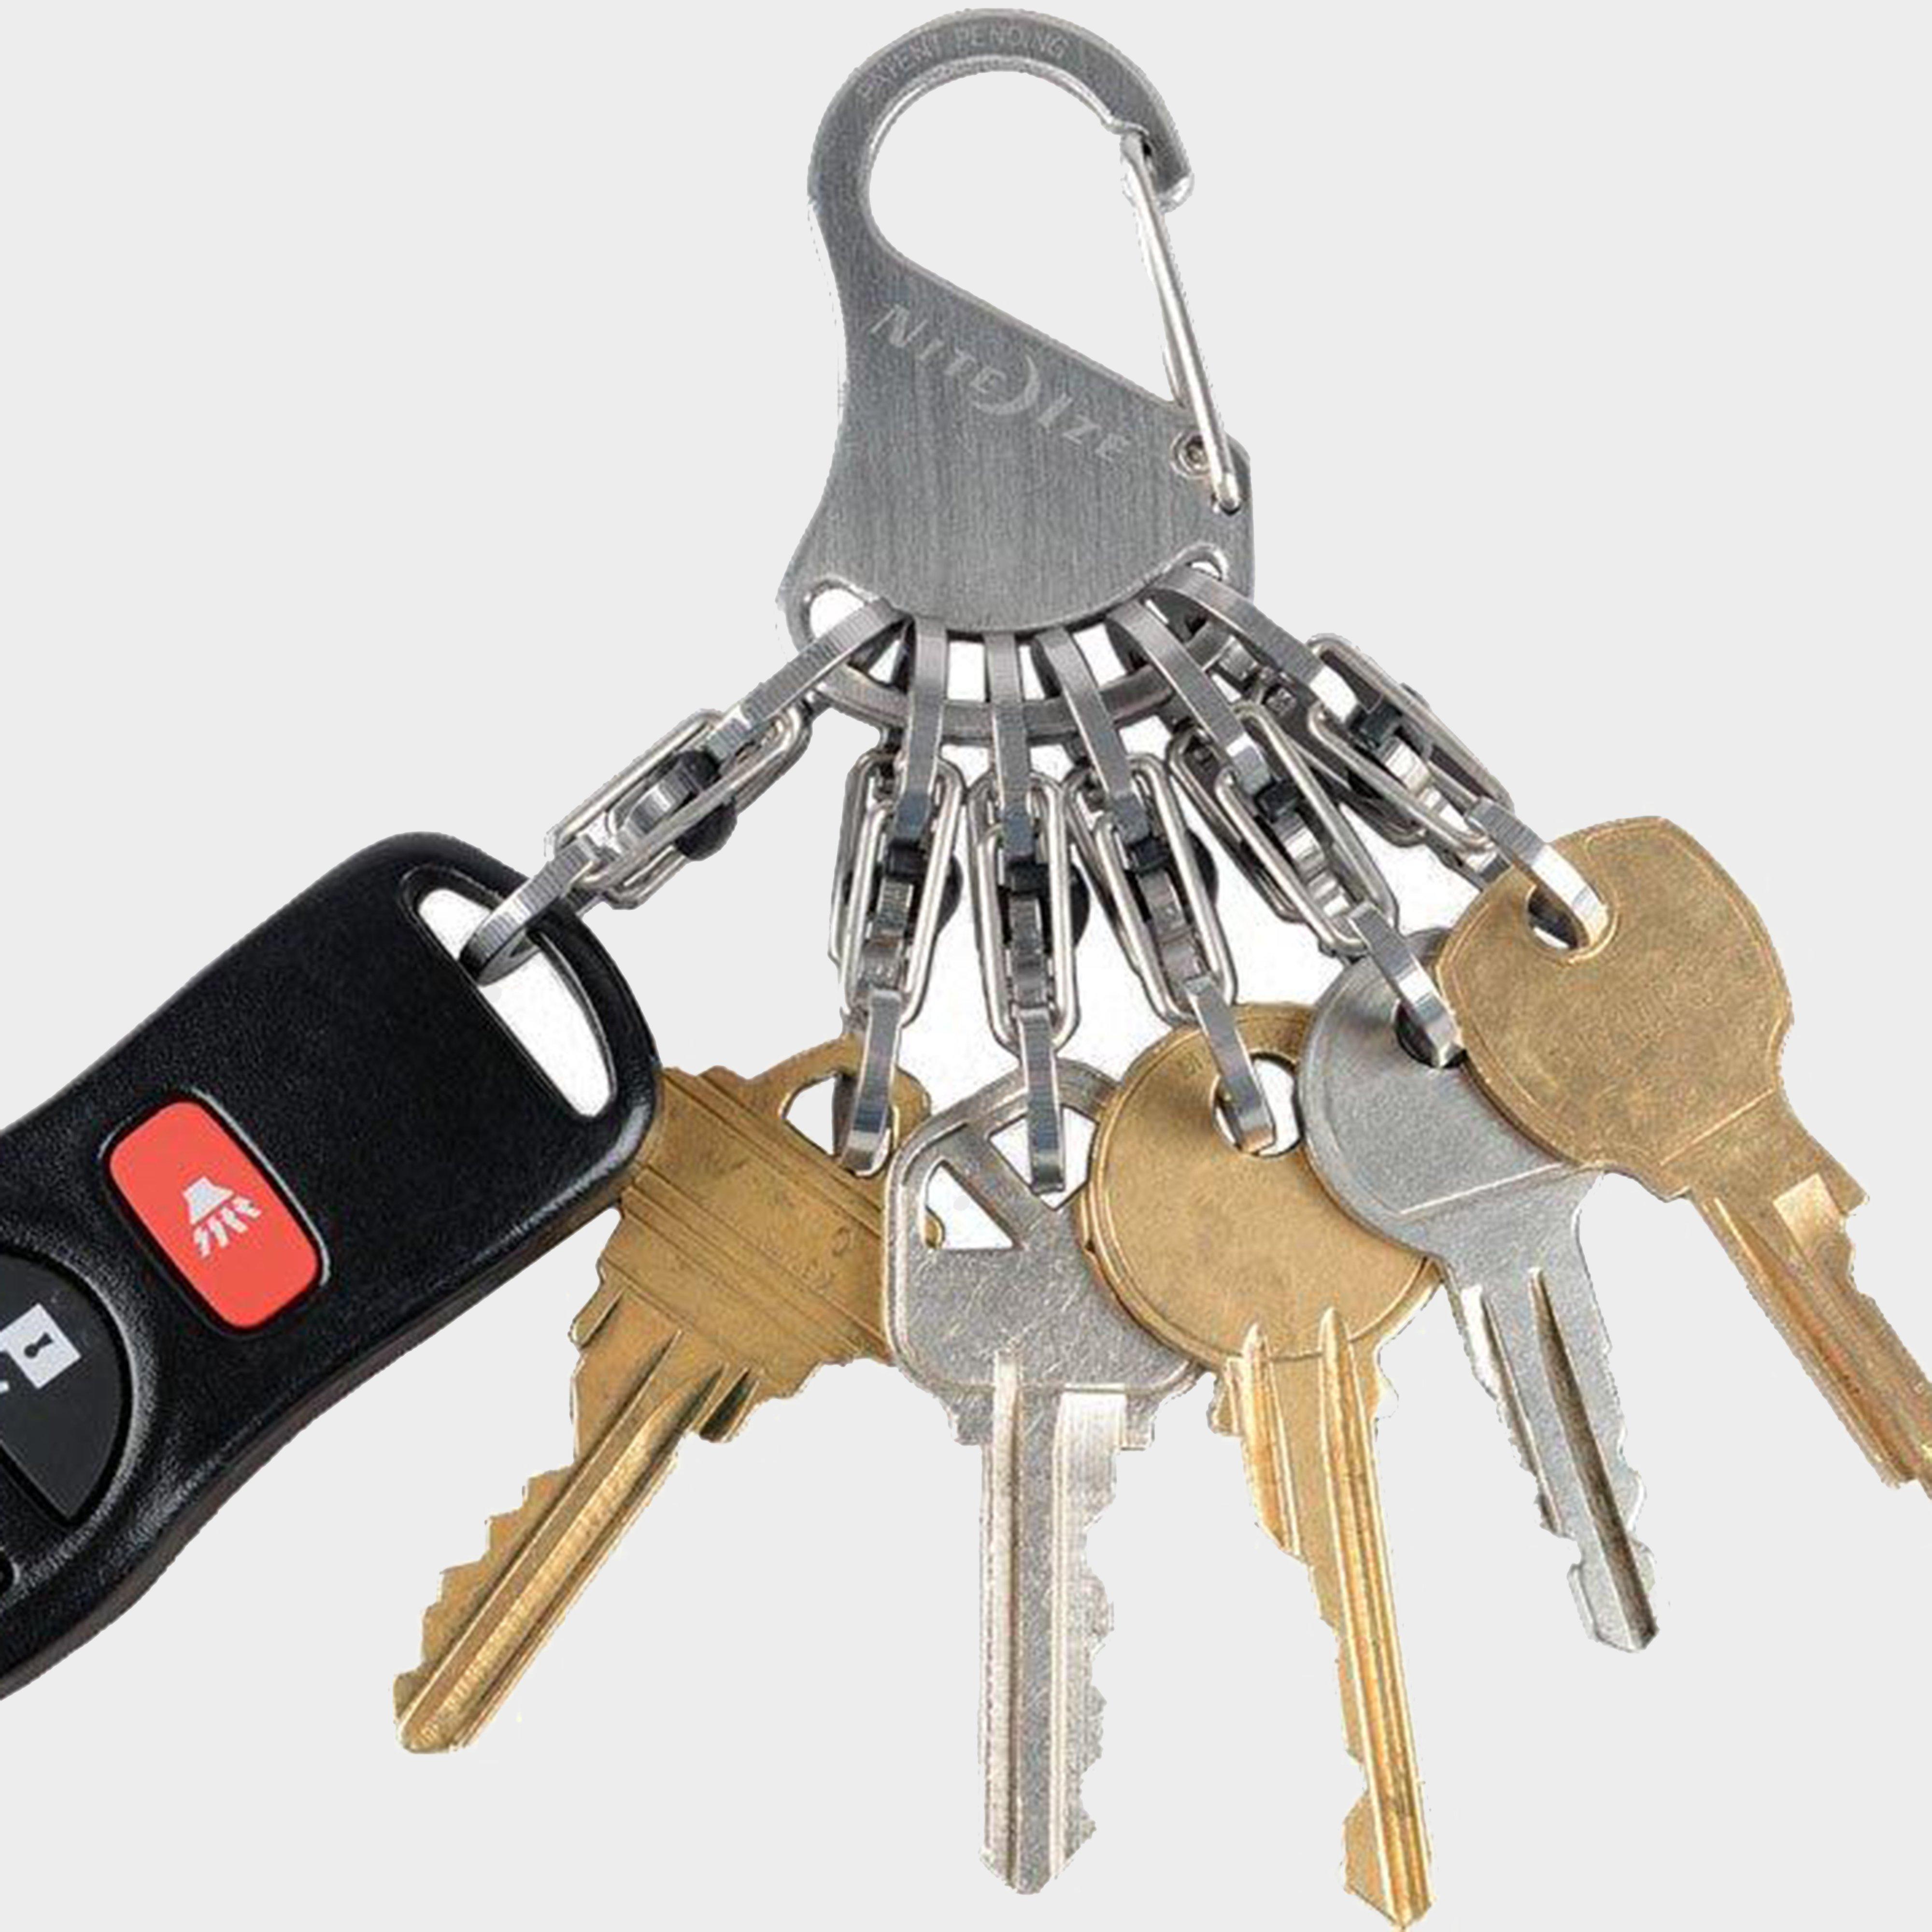 Image of Niteize Keyrack Locker - Silver/Slv, Silver/SLV